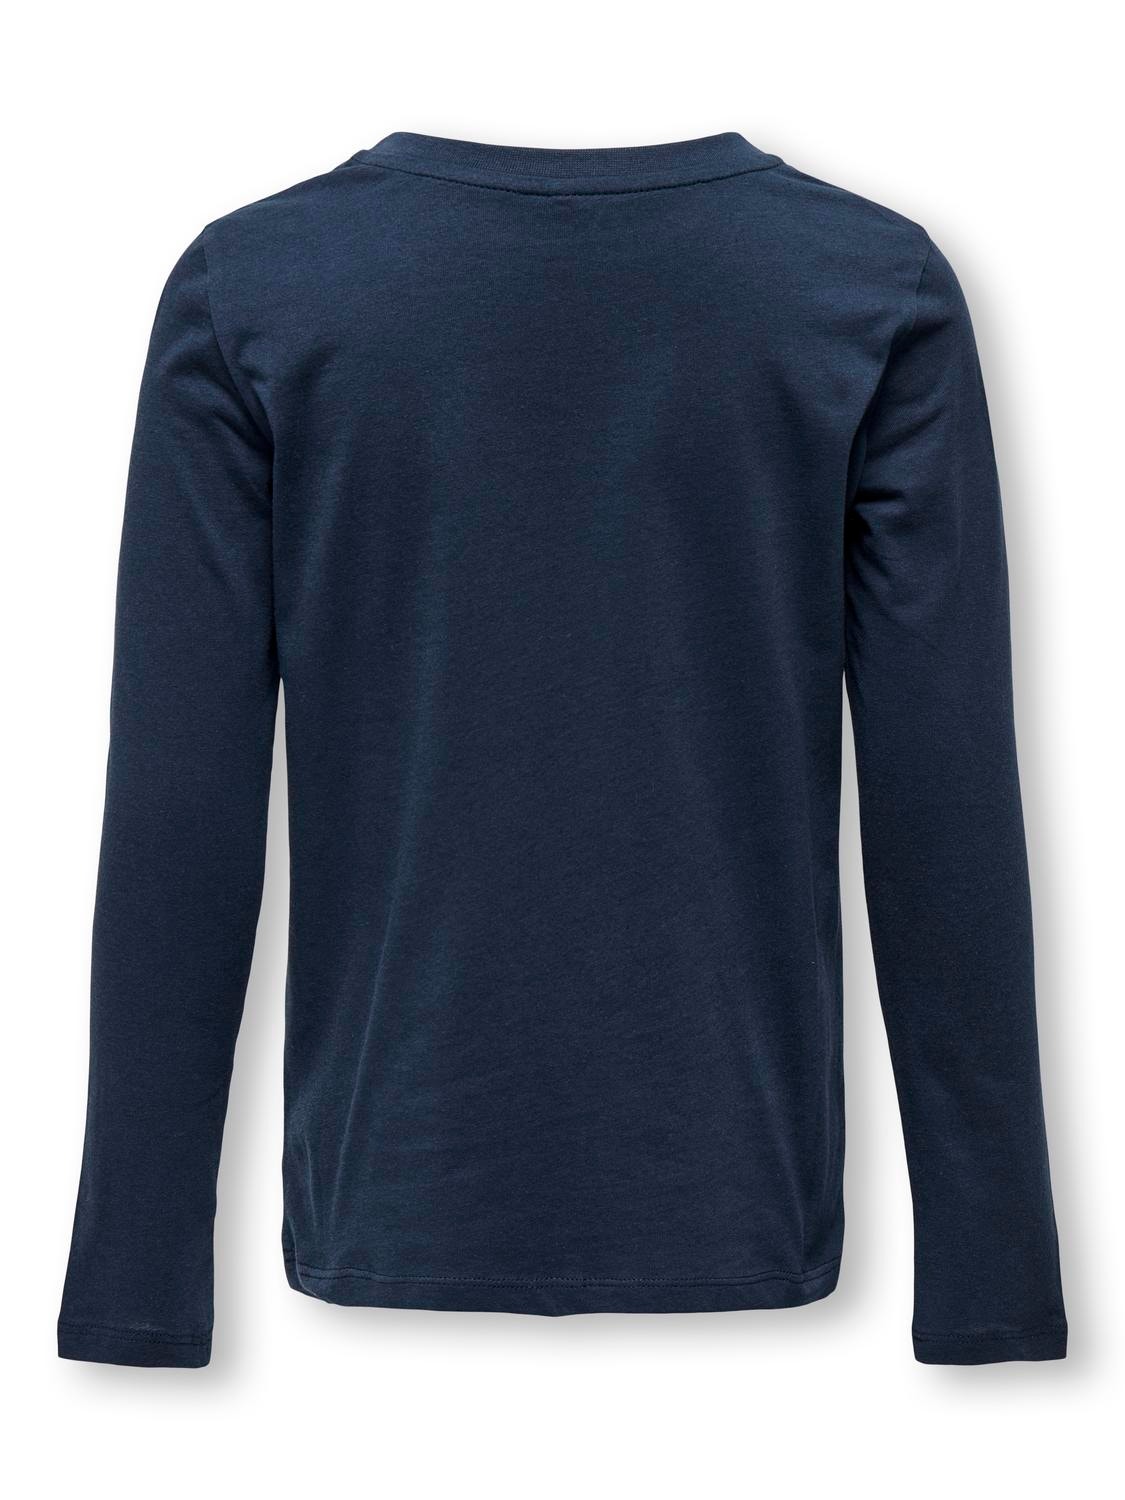 ONLY Camisetas Corte regular Cuello redondo -Dress Blues - 15303581